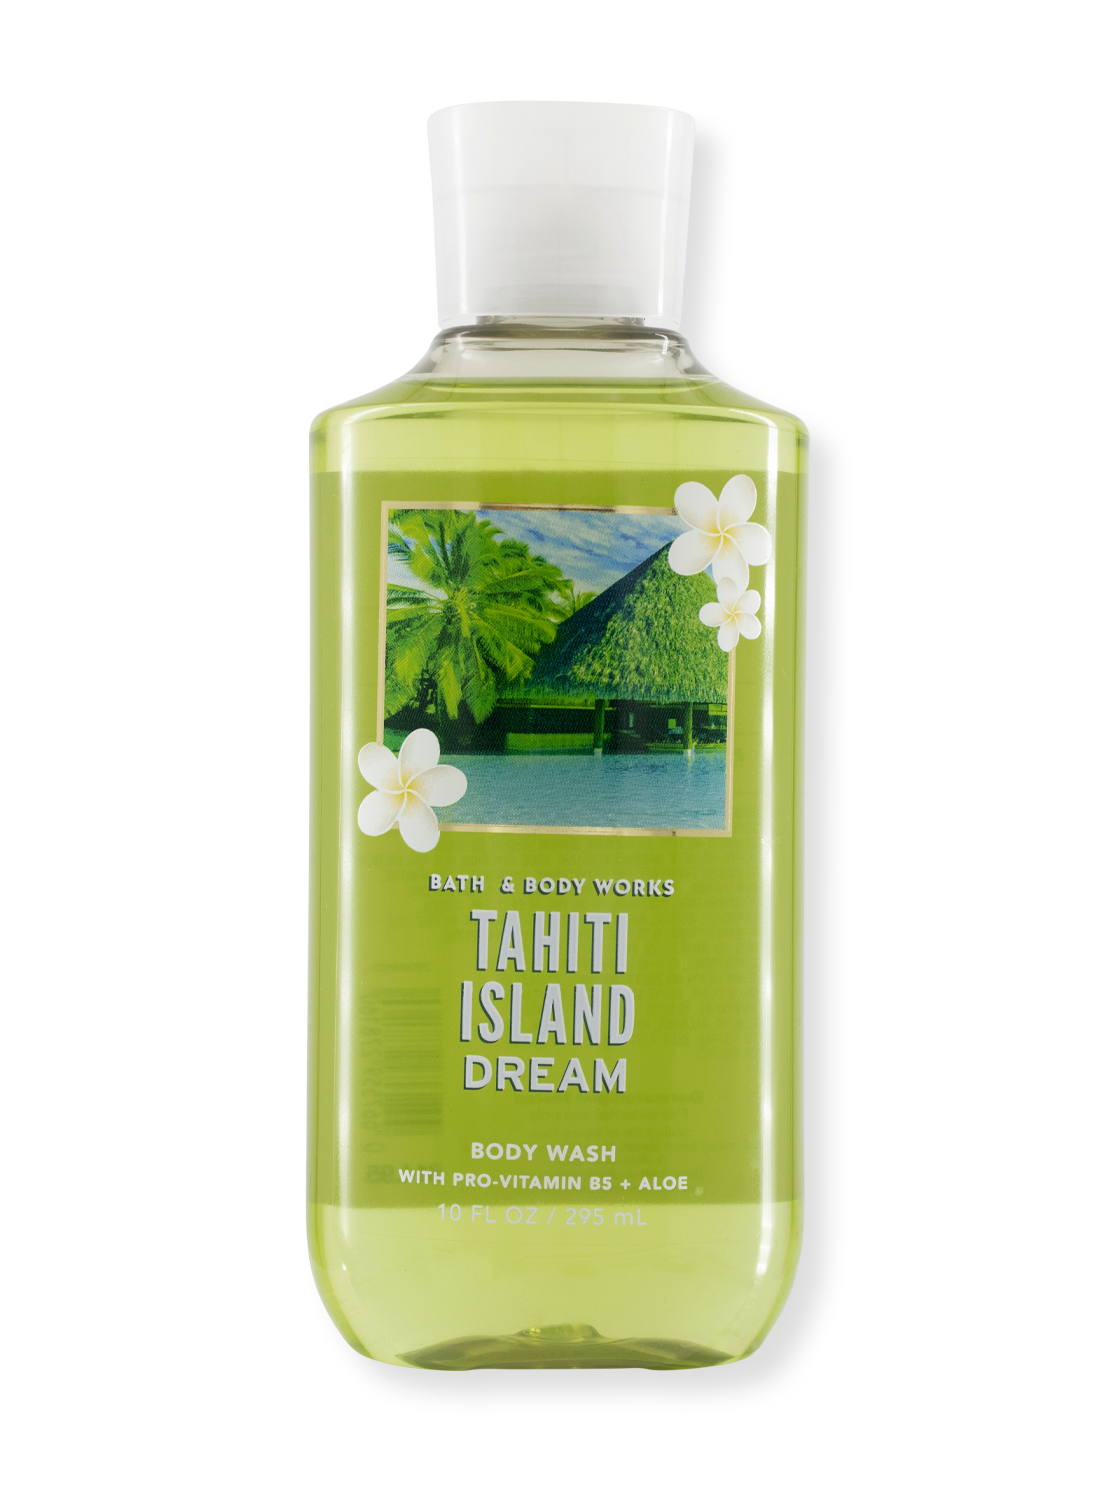 Gel de douche / lavage du corps - Tahiti Island Dream - 295 ml